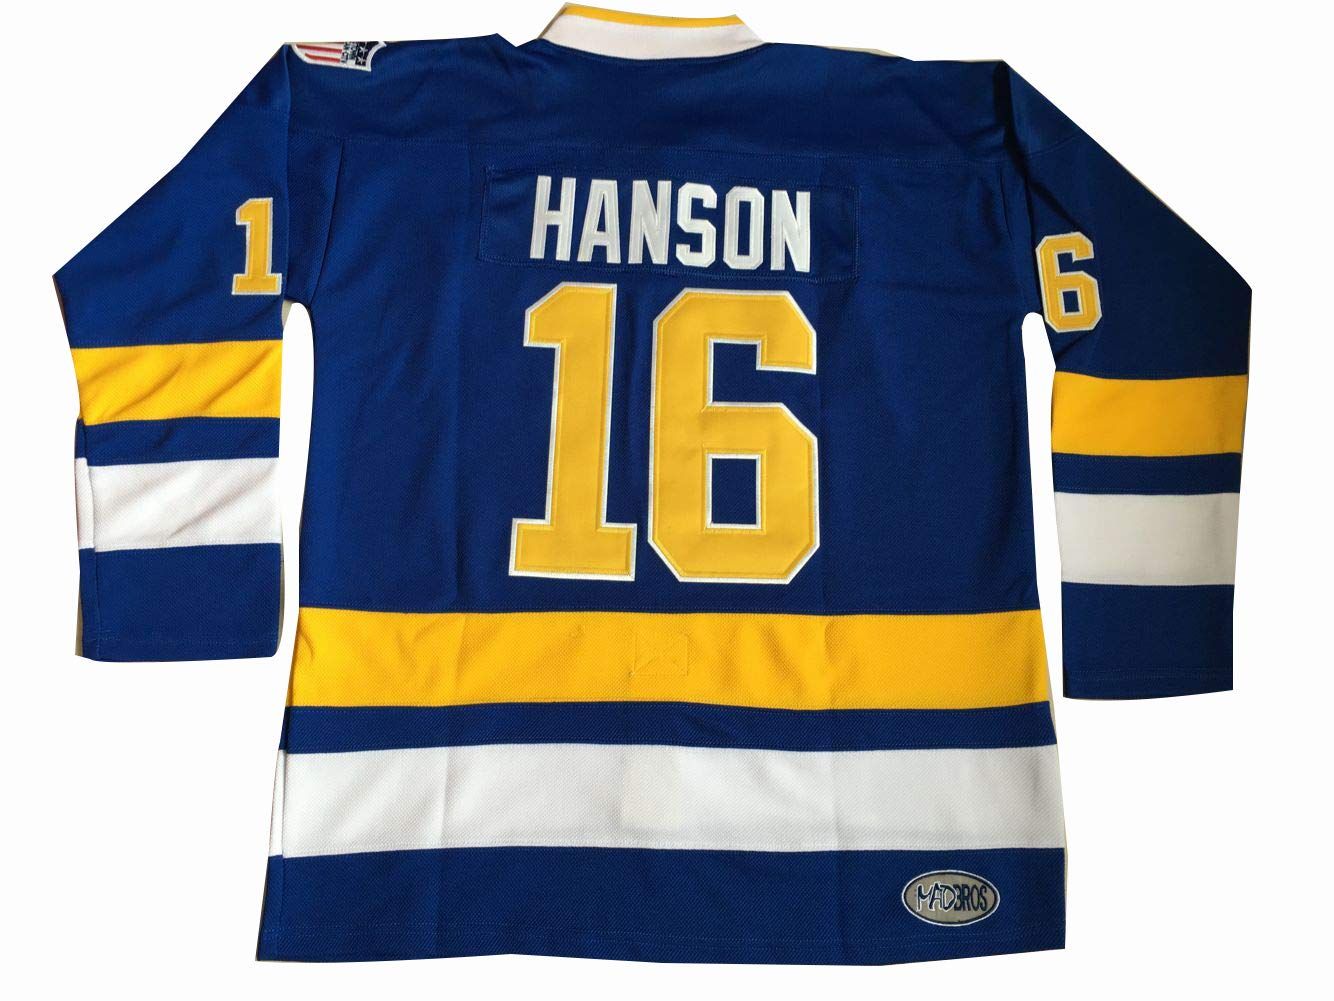 16 Hanson Blue.